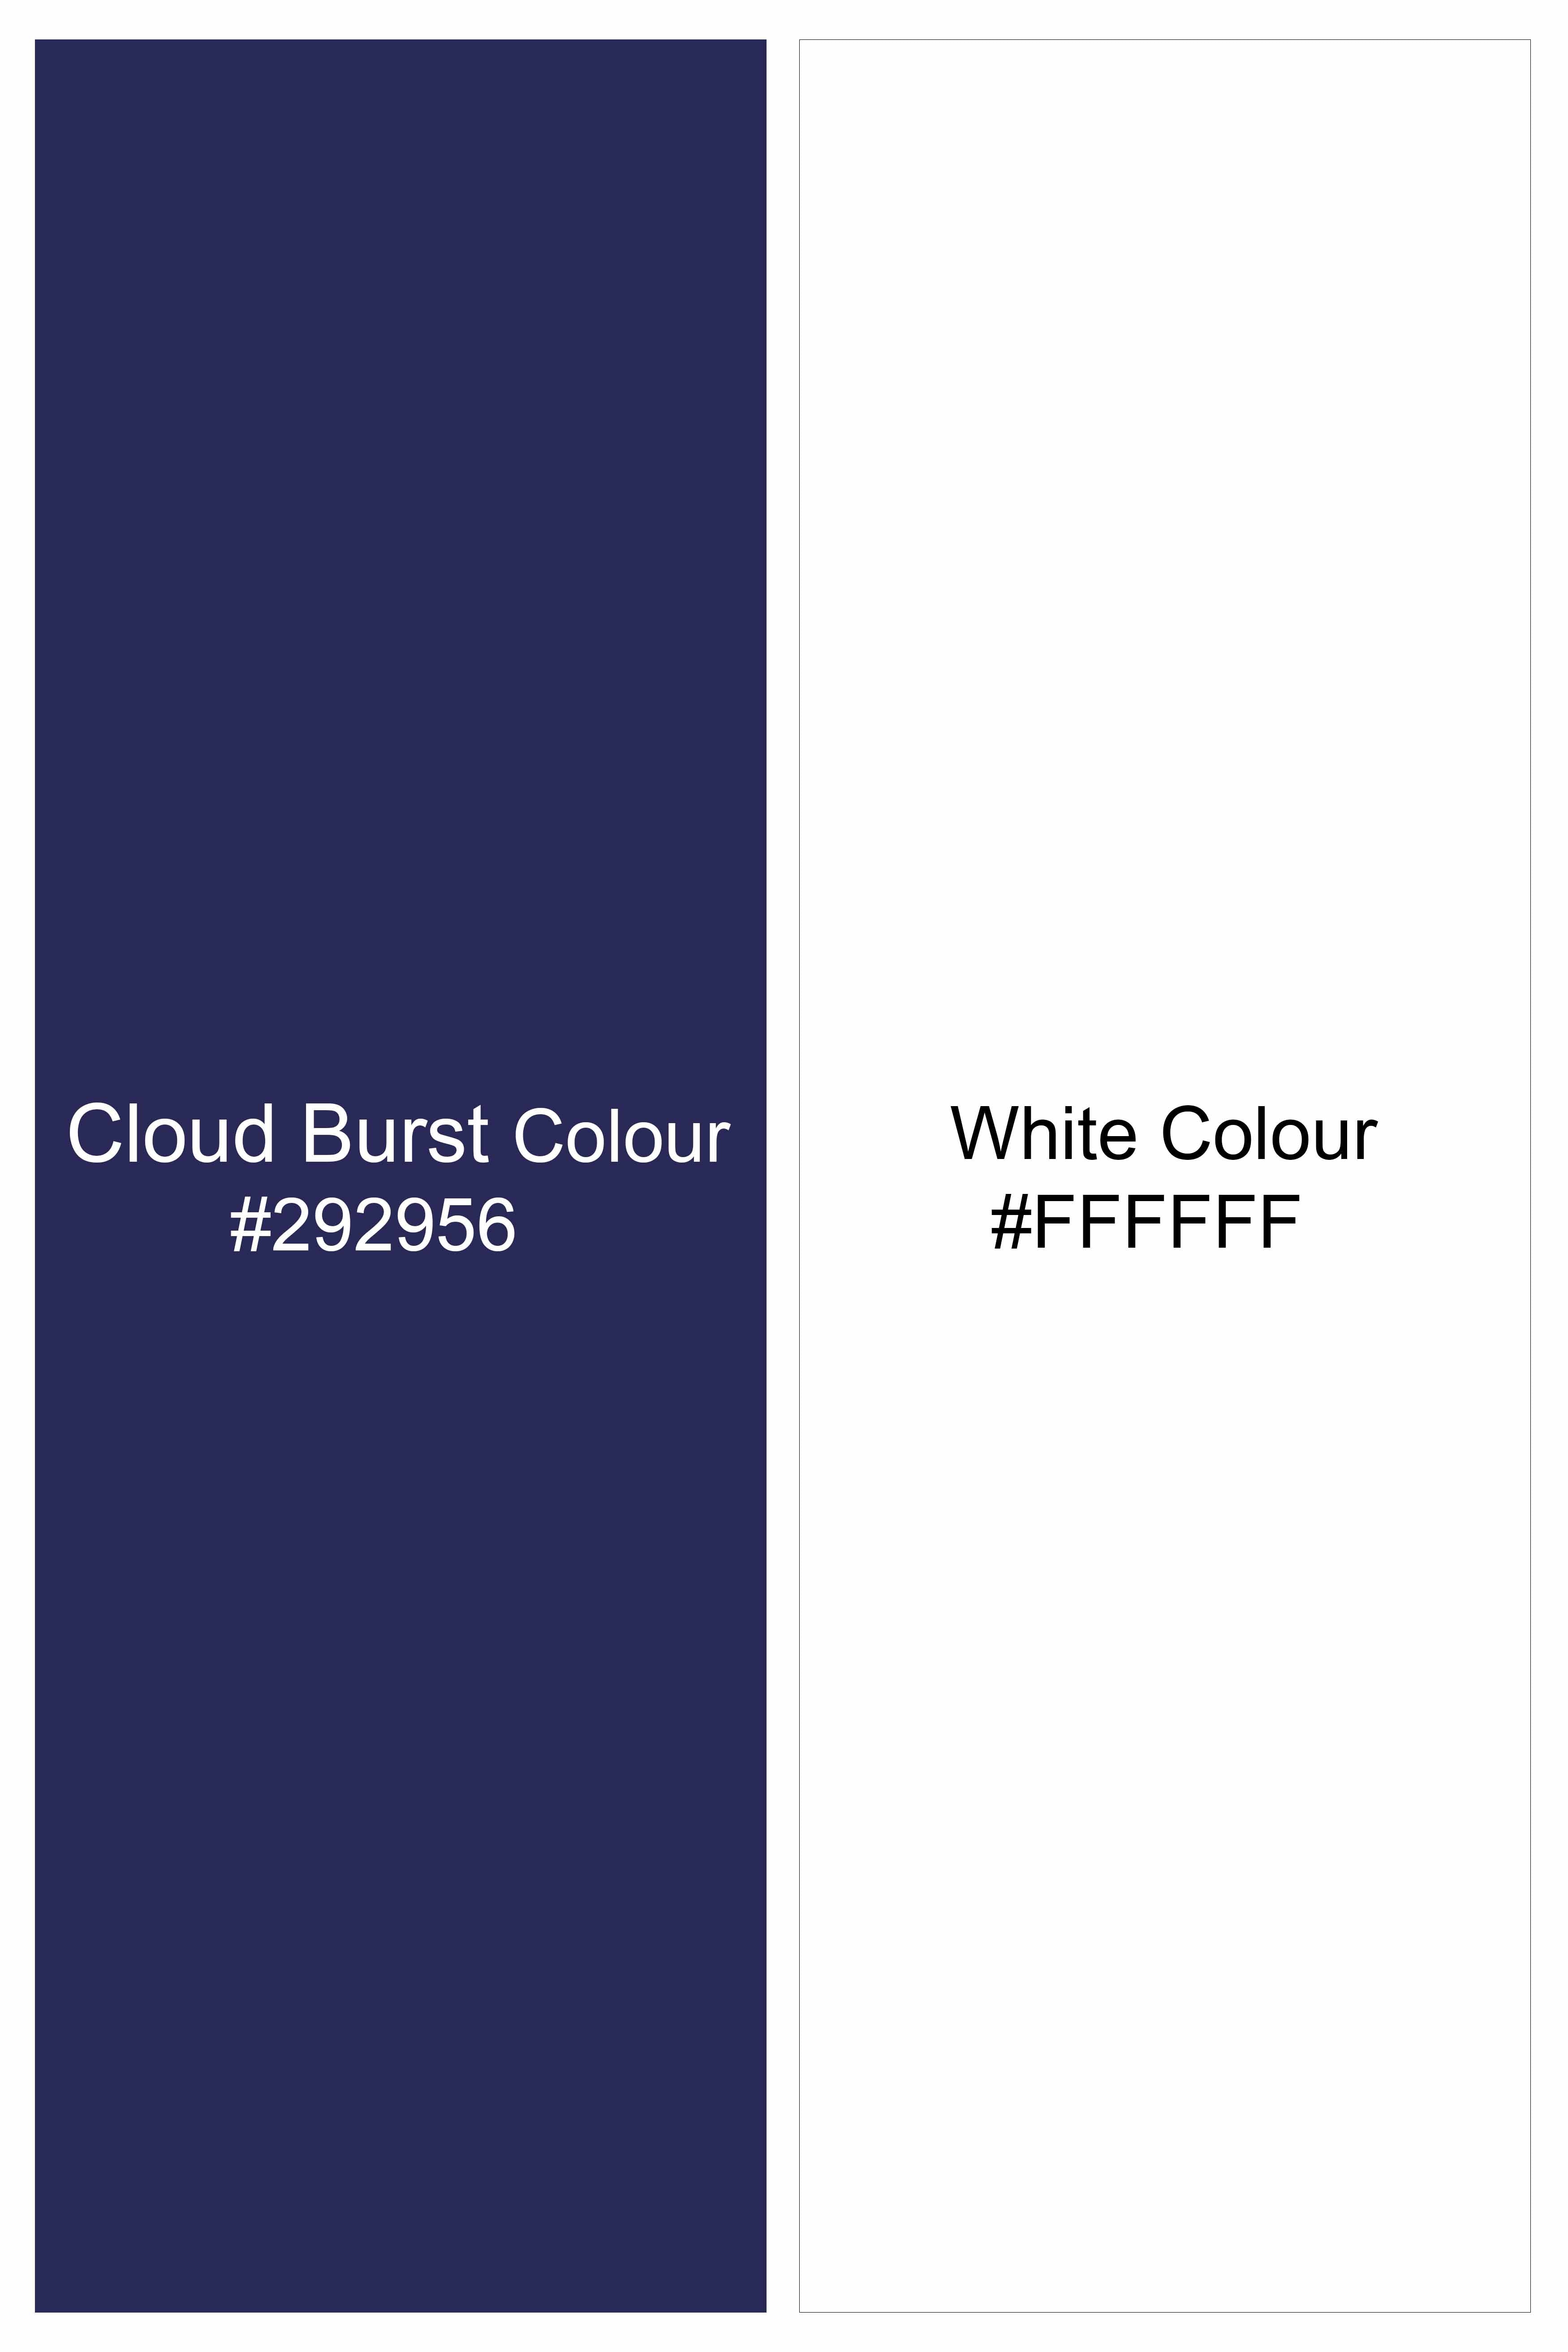 Cloud Burst Blue Dobby Textured Premium Giza Cotton Shirt 11598-BD-BLE-38, 11598-BD-BLE-H-38, 11598-BD-BLE-39, 11598-BD-BLE-H-39, 11598-BD-BLE-40, 11598-BD-BLE-H-40, 11598-BD-BLE-42, 11598-BD-BLE-H-42, 11598-BD-BLE-44, 11598-BD-BLE-H-44, 11598-BD-BLE-46, 11598-BD-BLE-H-46, 11598-BD-BLE-48, 11598-BD-BLE-H-48, 11598-BD-BLE-50, 11598-BD-BLE-H-50, 11598-BD-BLE-52, 11598-BD-BLE-H-52